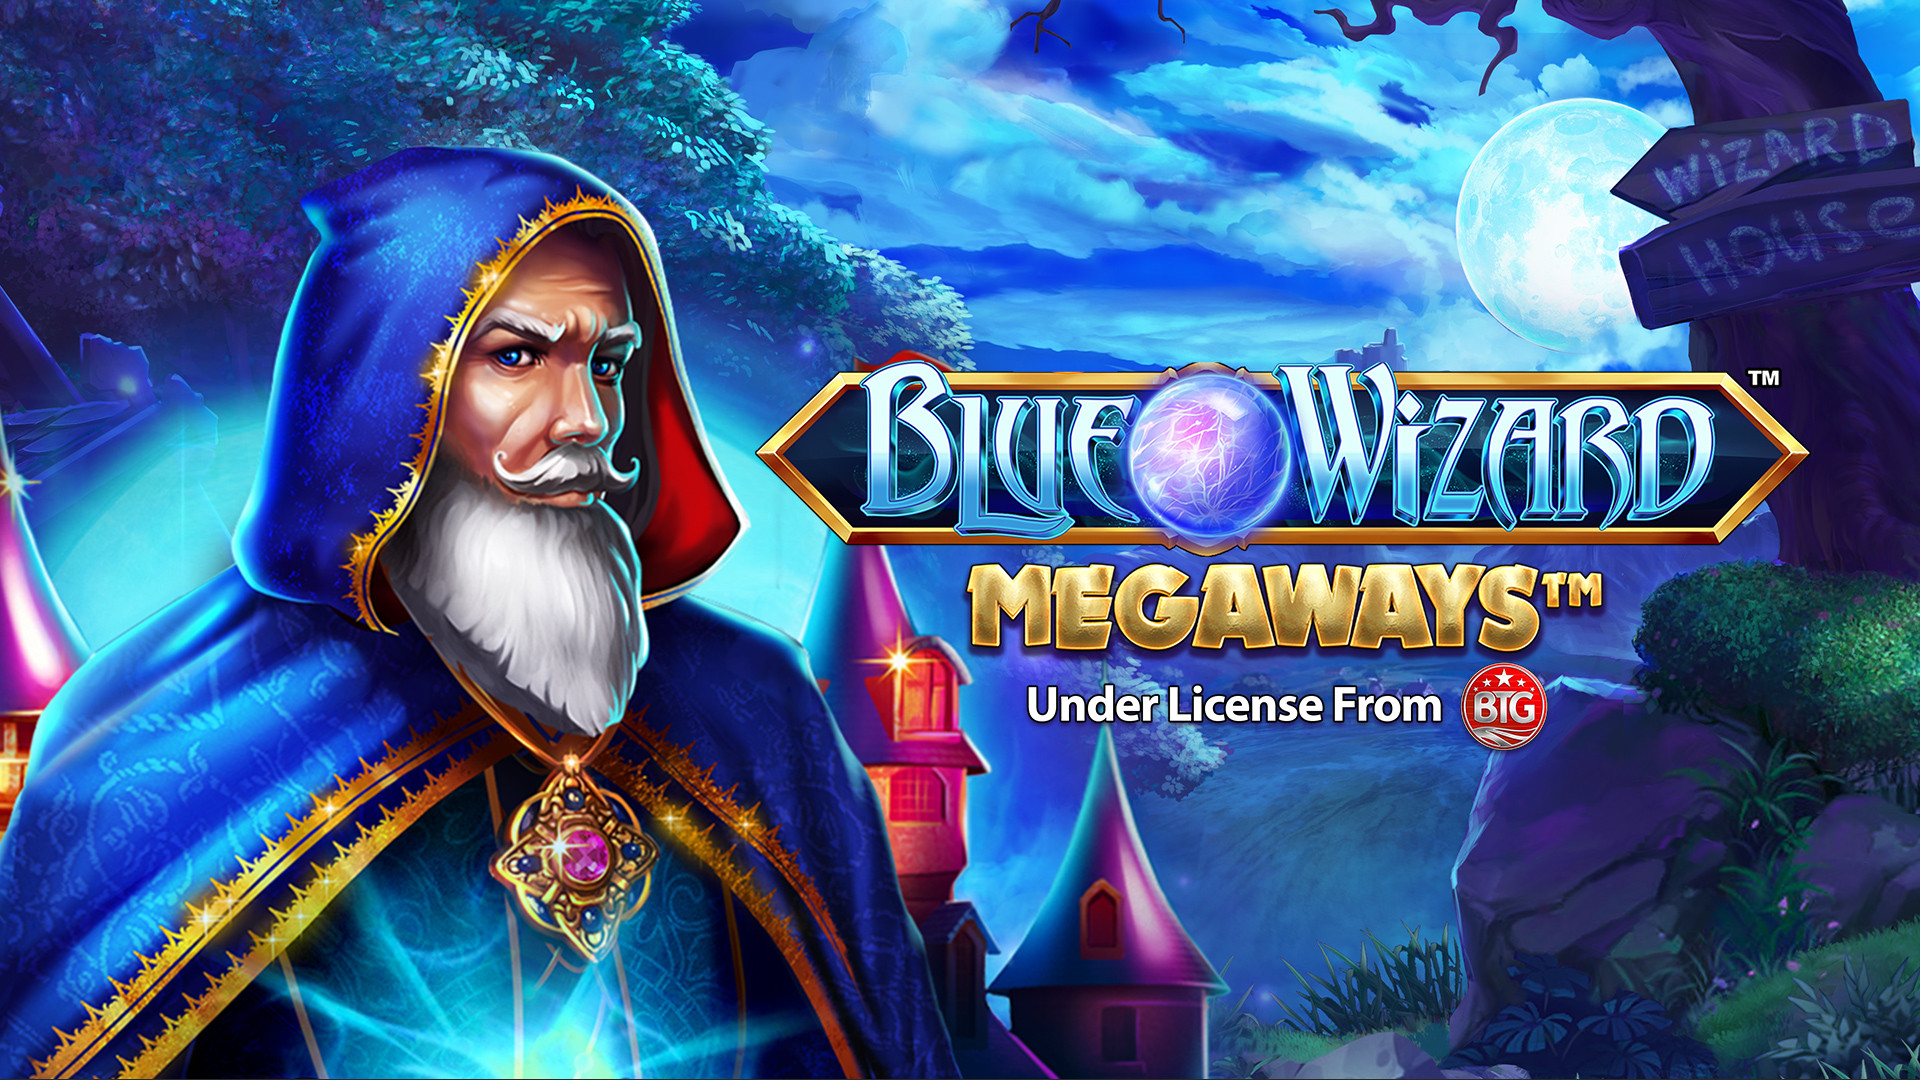 Fire Blaze: Blue Wizard MEGAWAYS